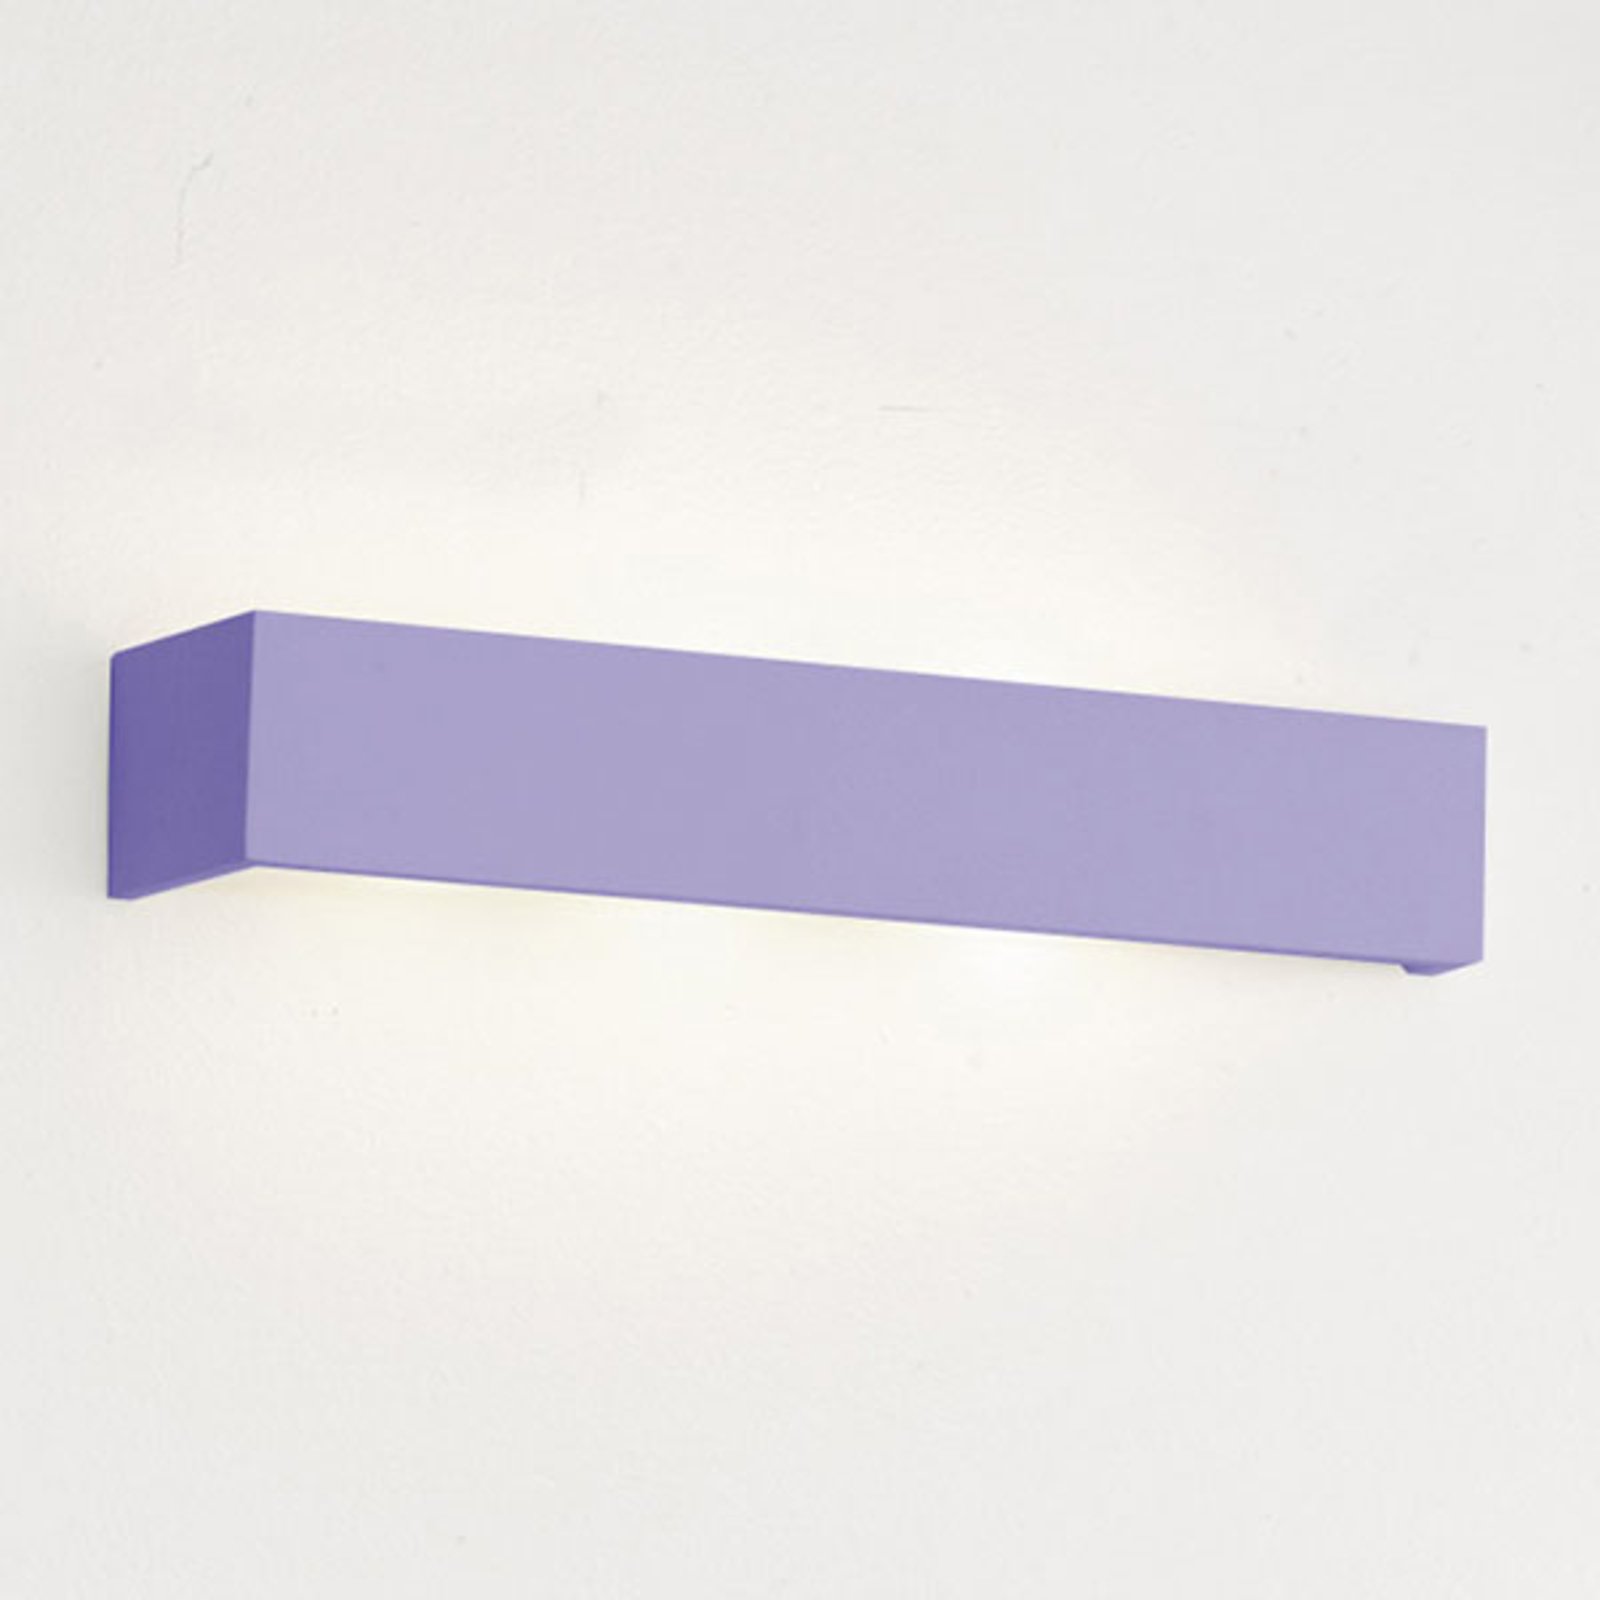 Teos wall light, width 24.5 cm